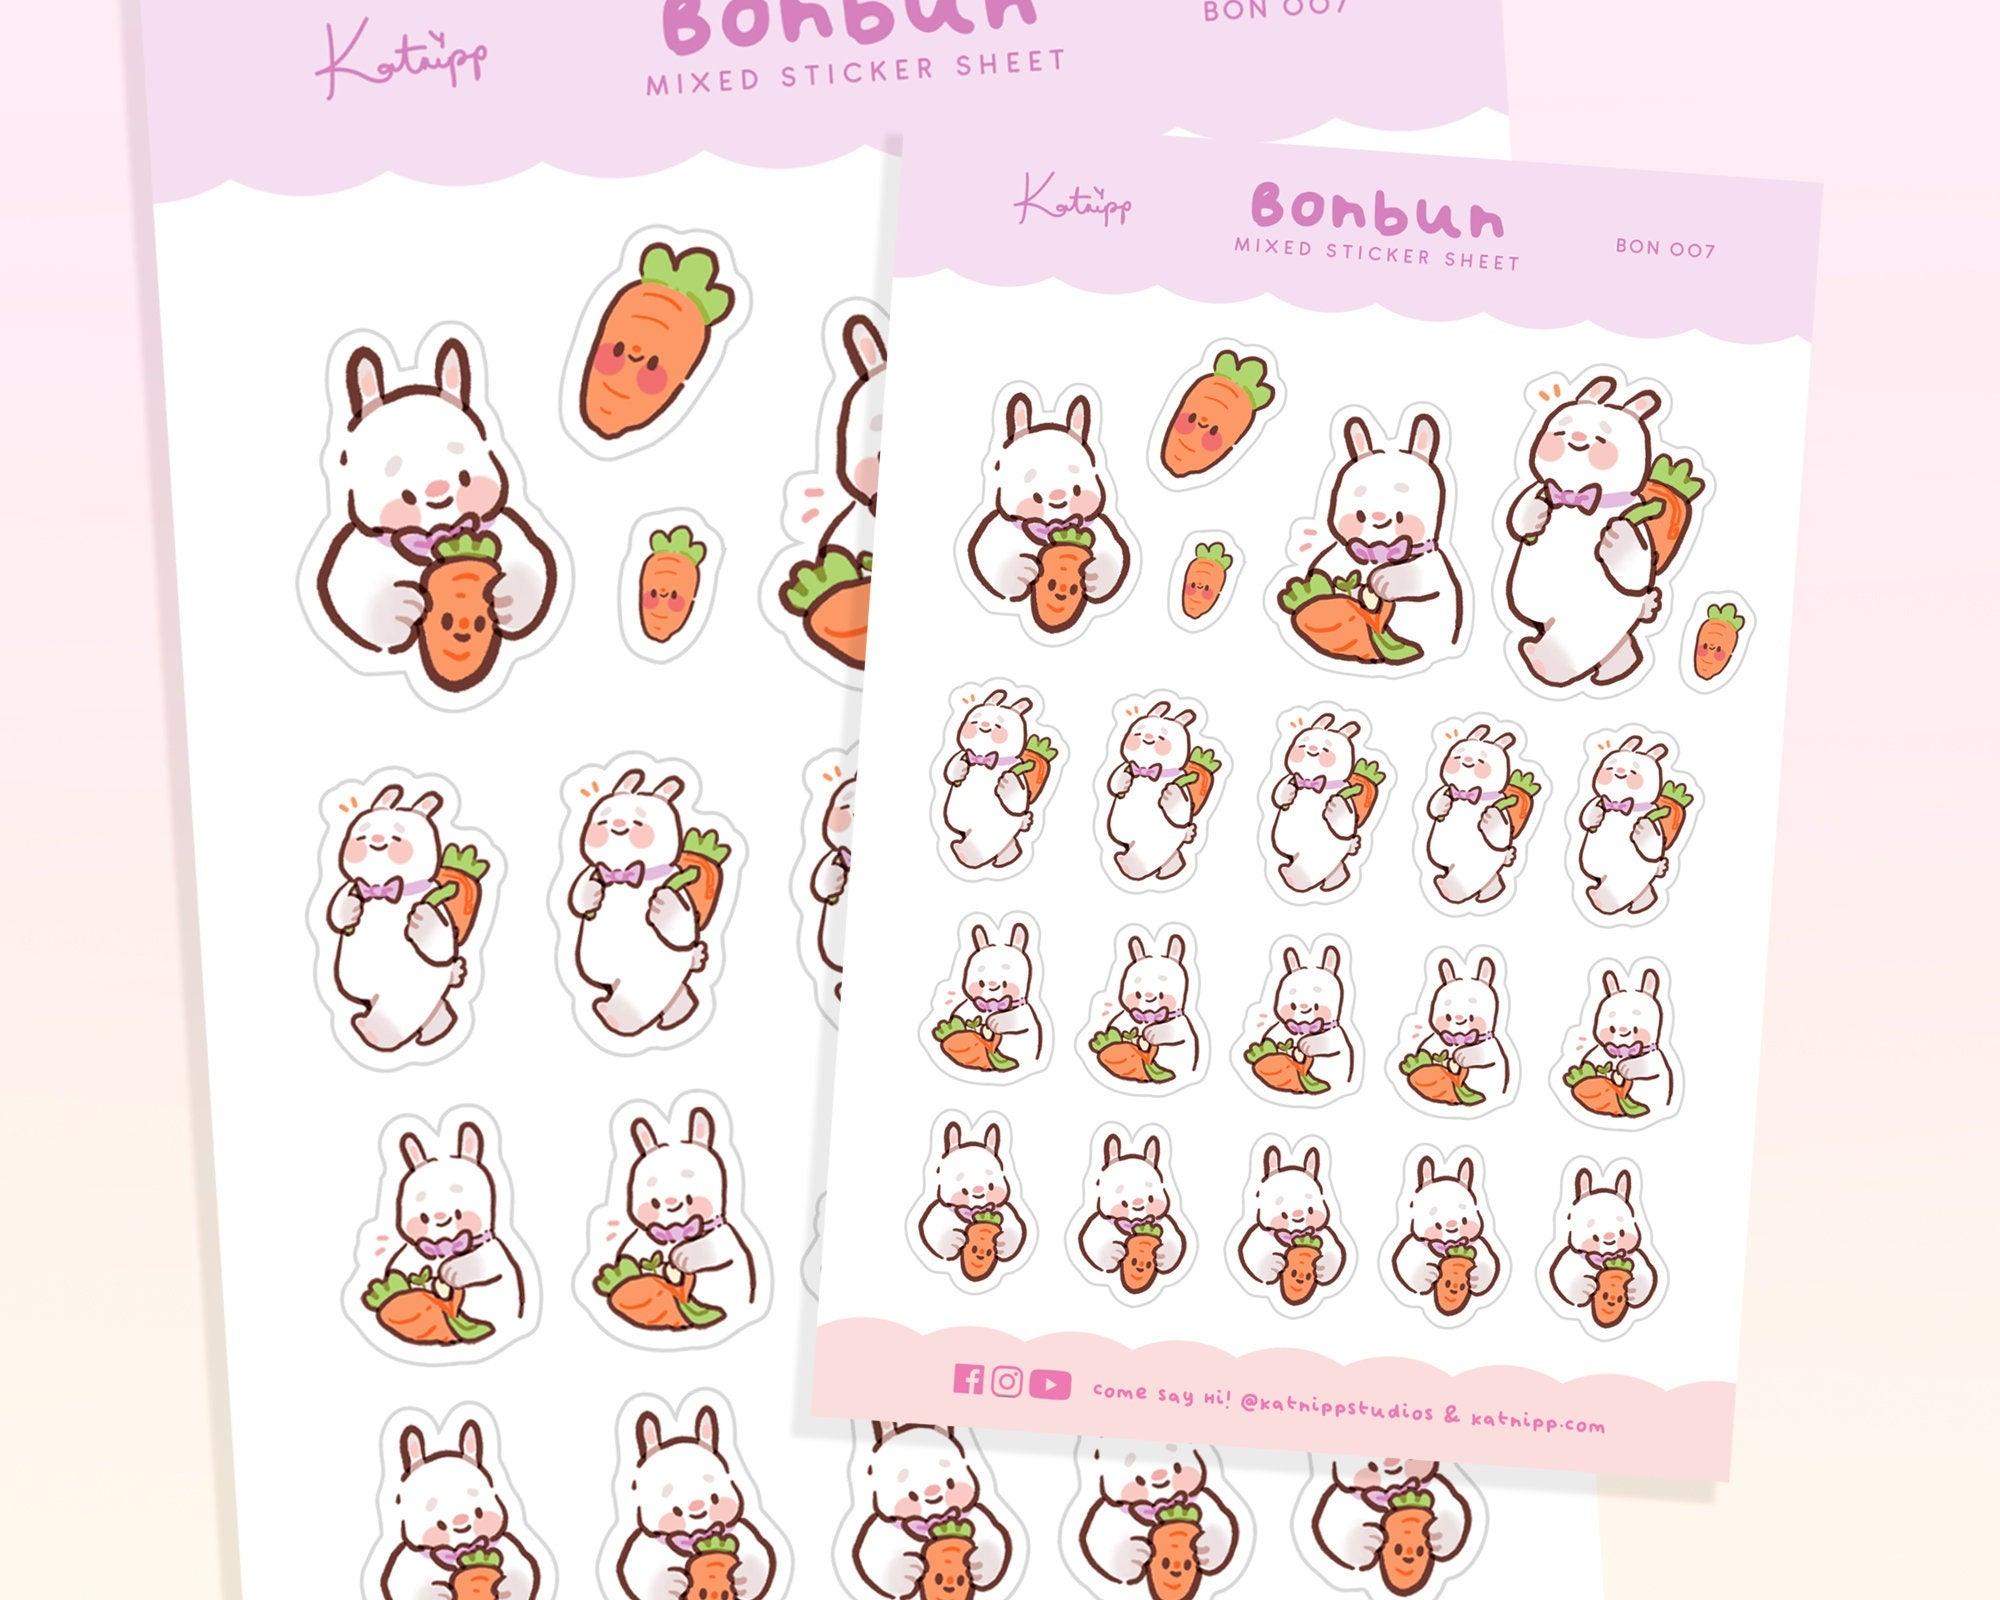 Bonbun School Day Planner Sticker Sheet - Bunny packing carrot bag for school